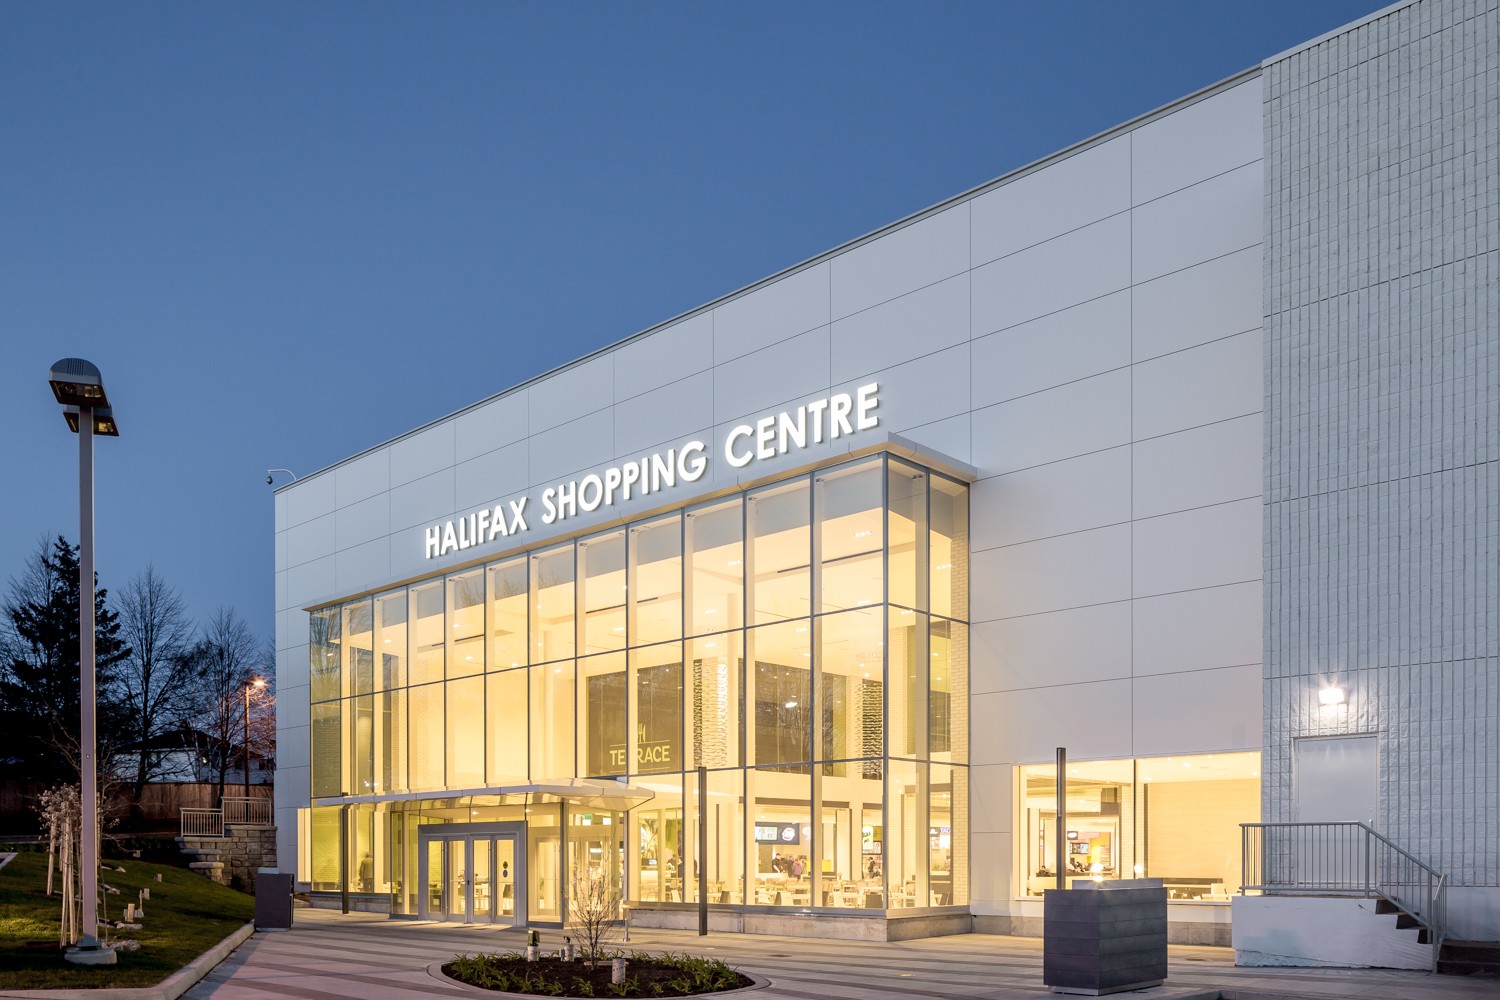 Halifax Shopping Centre